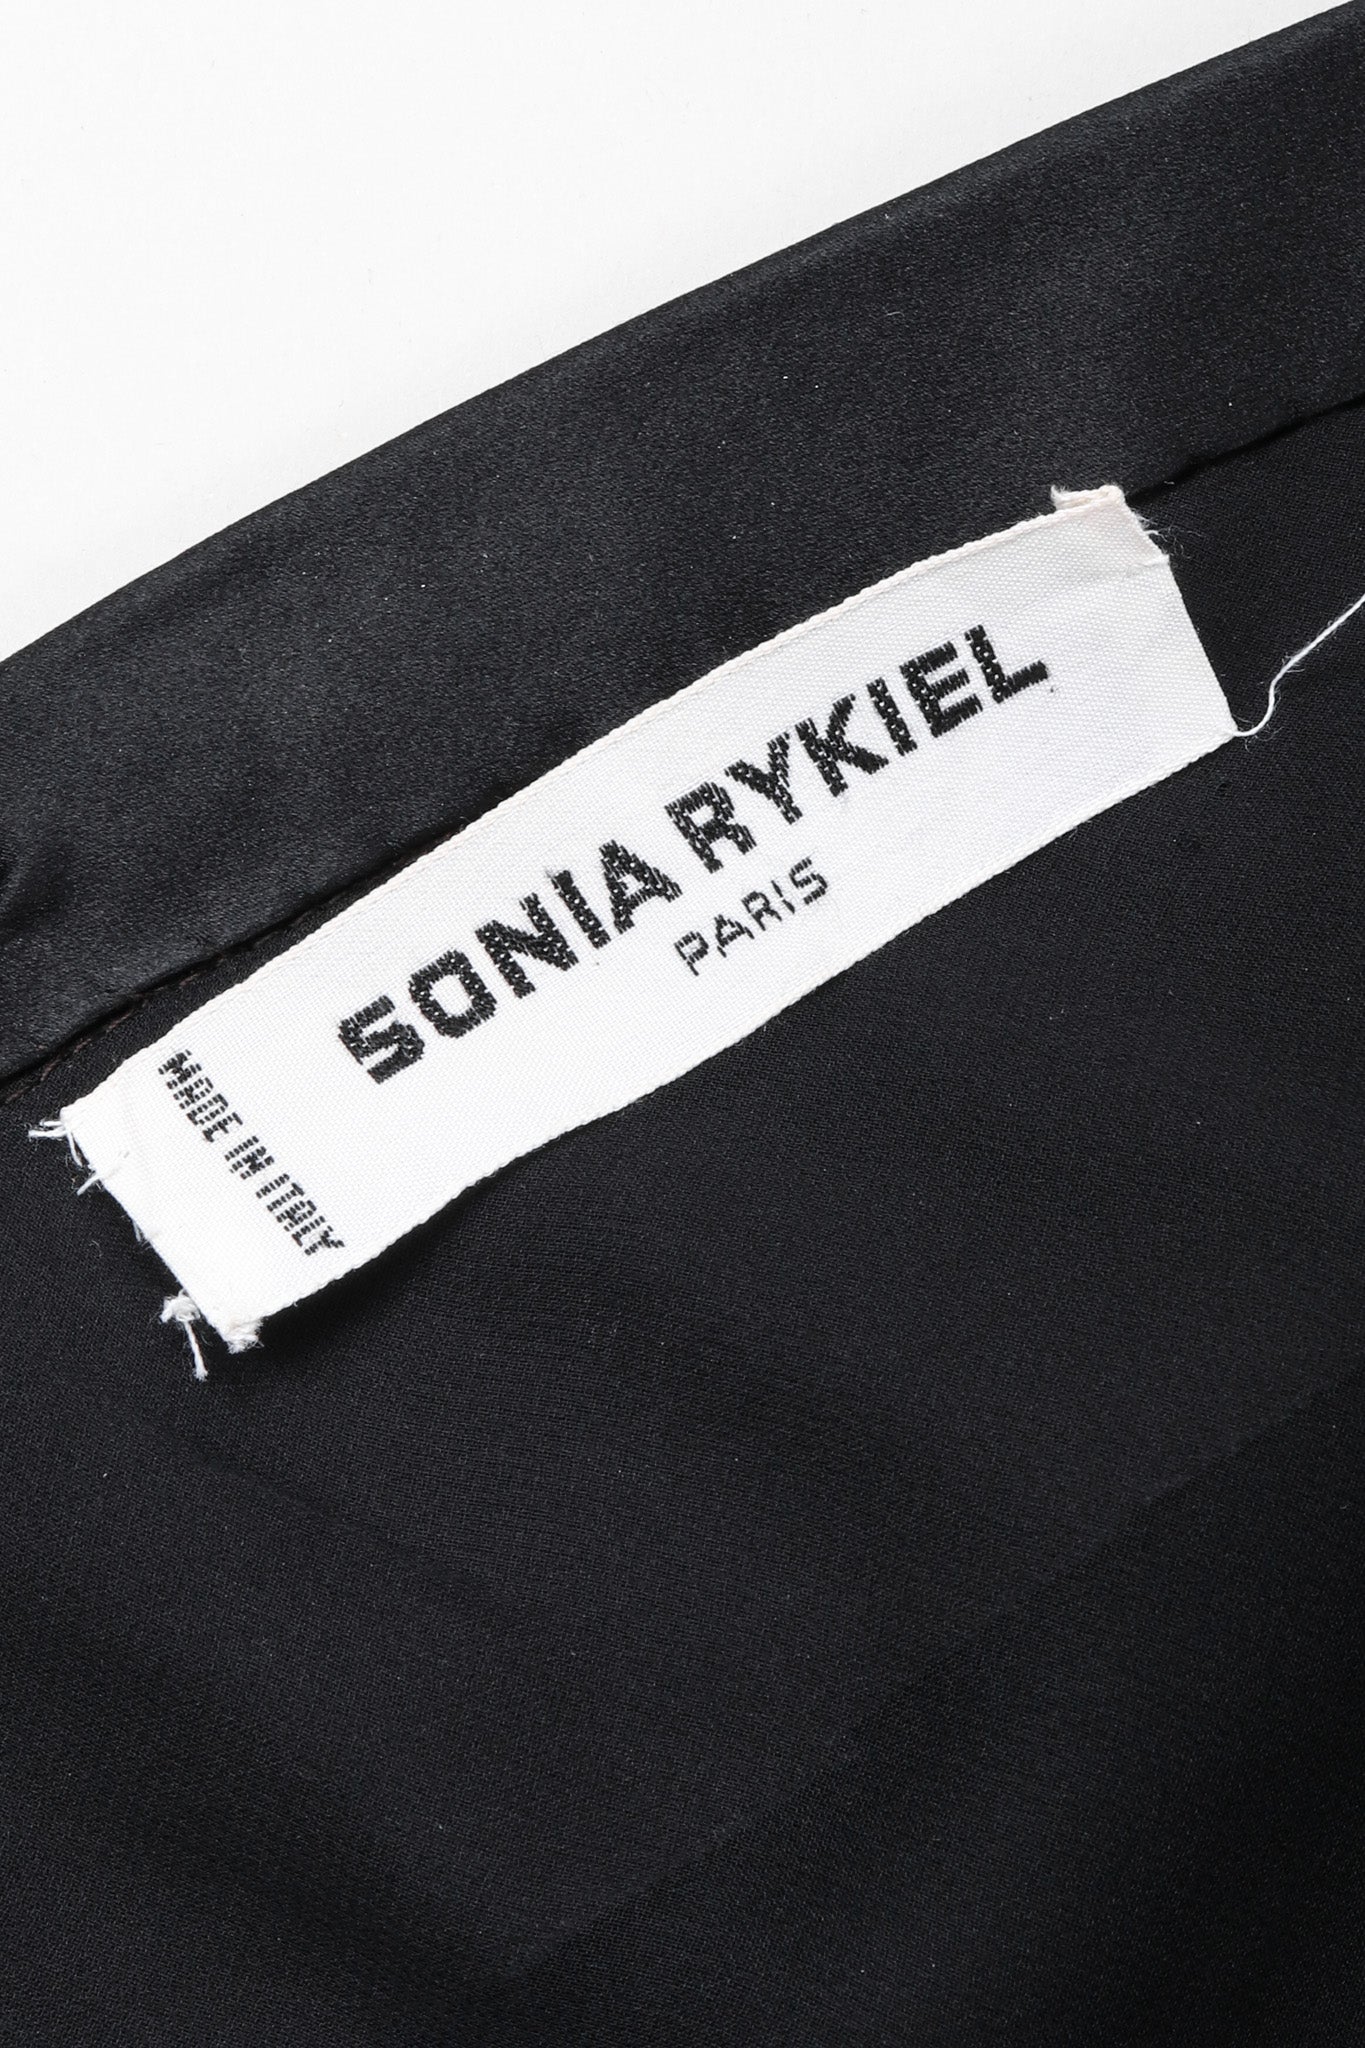 Recess Los Angeles Vintage Sonia Rykiel Minimalist 90s Bias Halter Sheath Gown